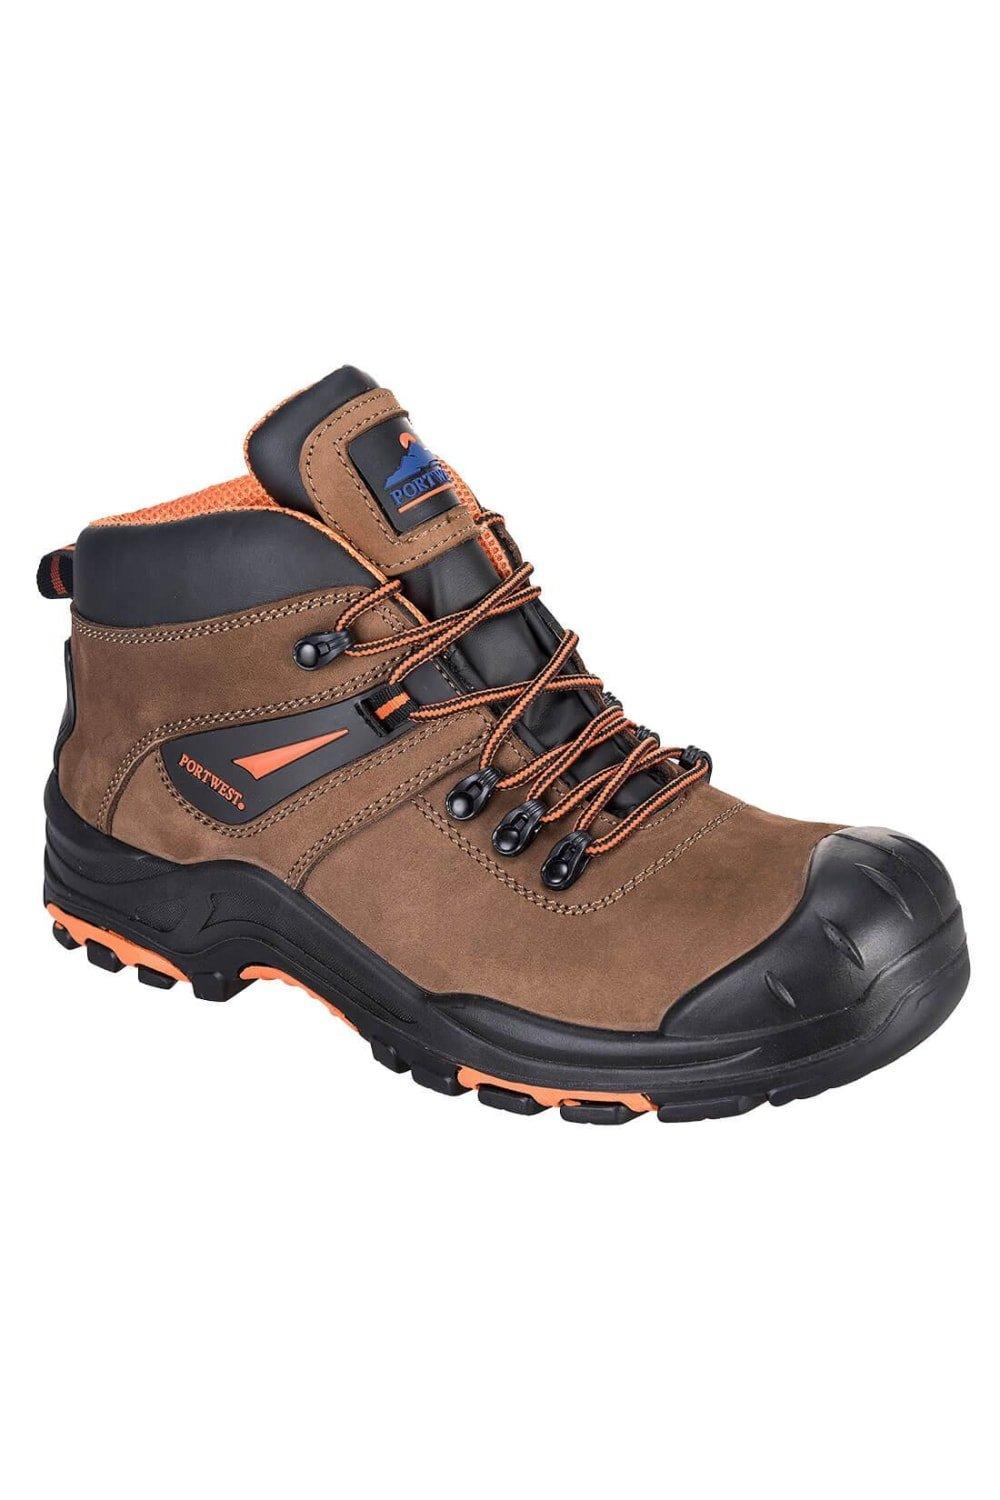 Montana Leather Compositelite Hiking Boots